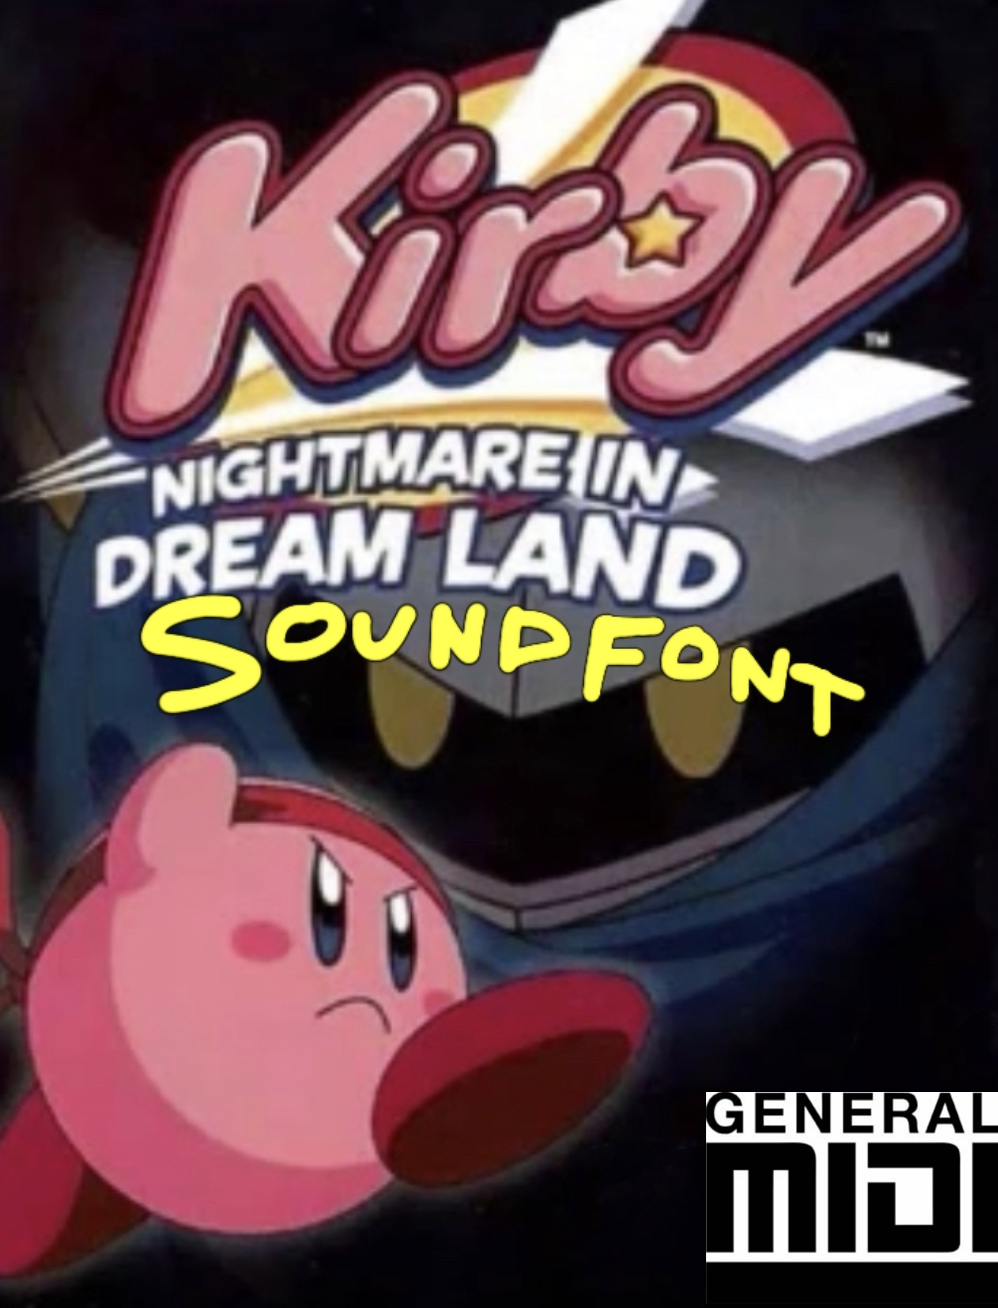 Kirby Nightmare in Dreamland SF2 (Official) by smochdar on DeviantArt